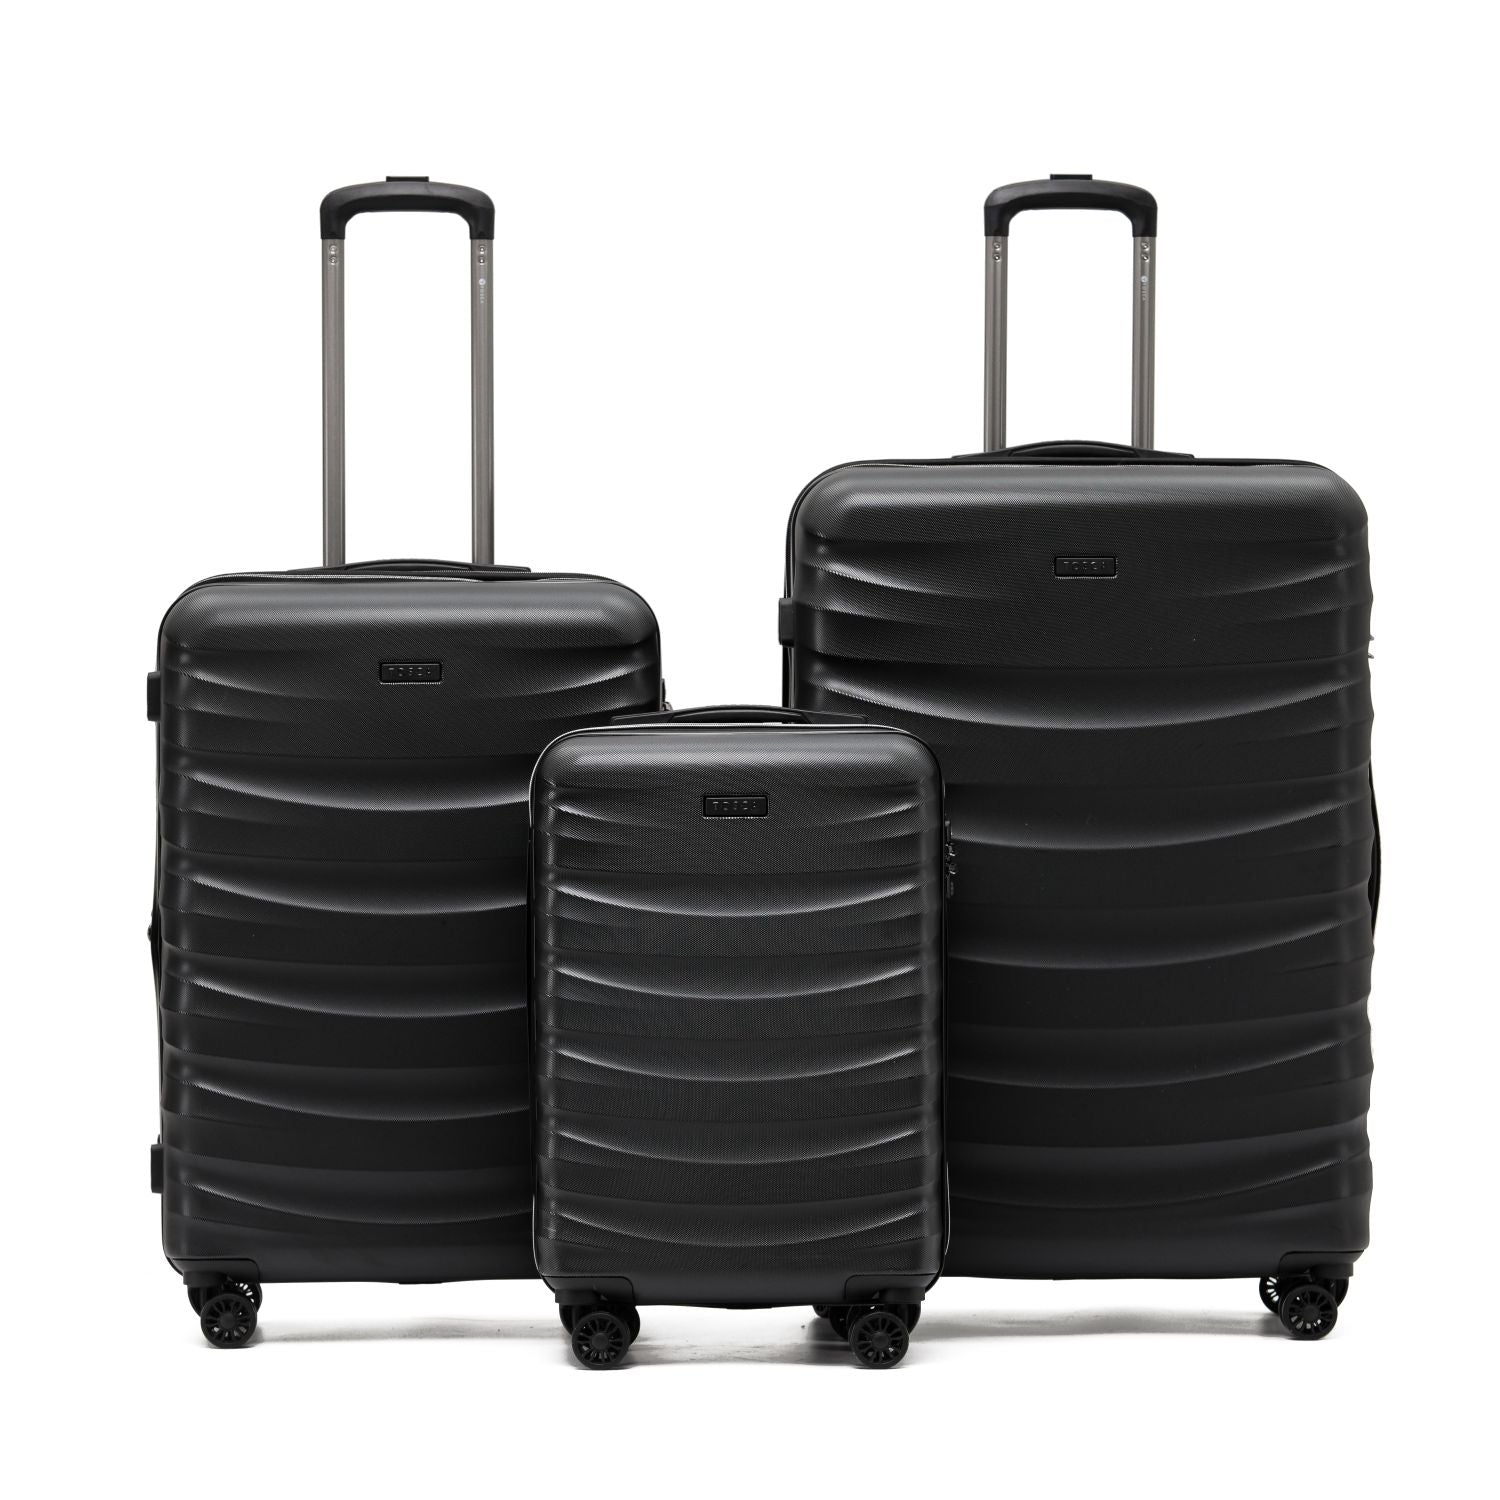 Tosca - Intersteller set of 3 suitcases - Black - 0